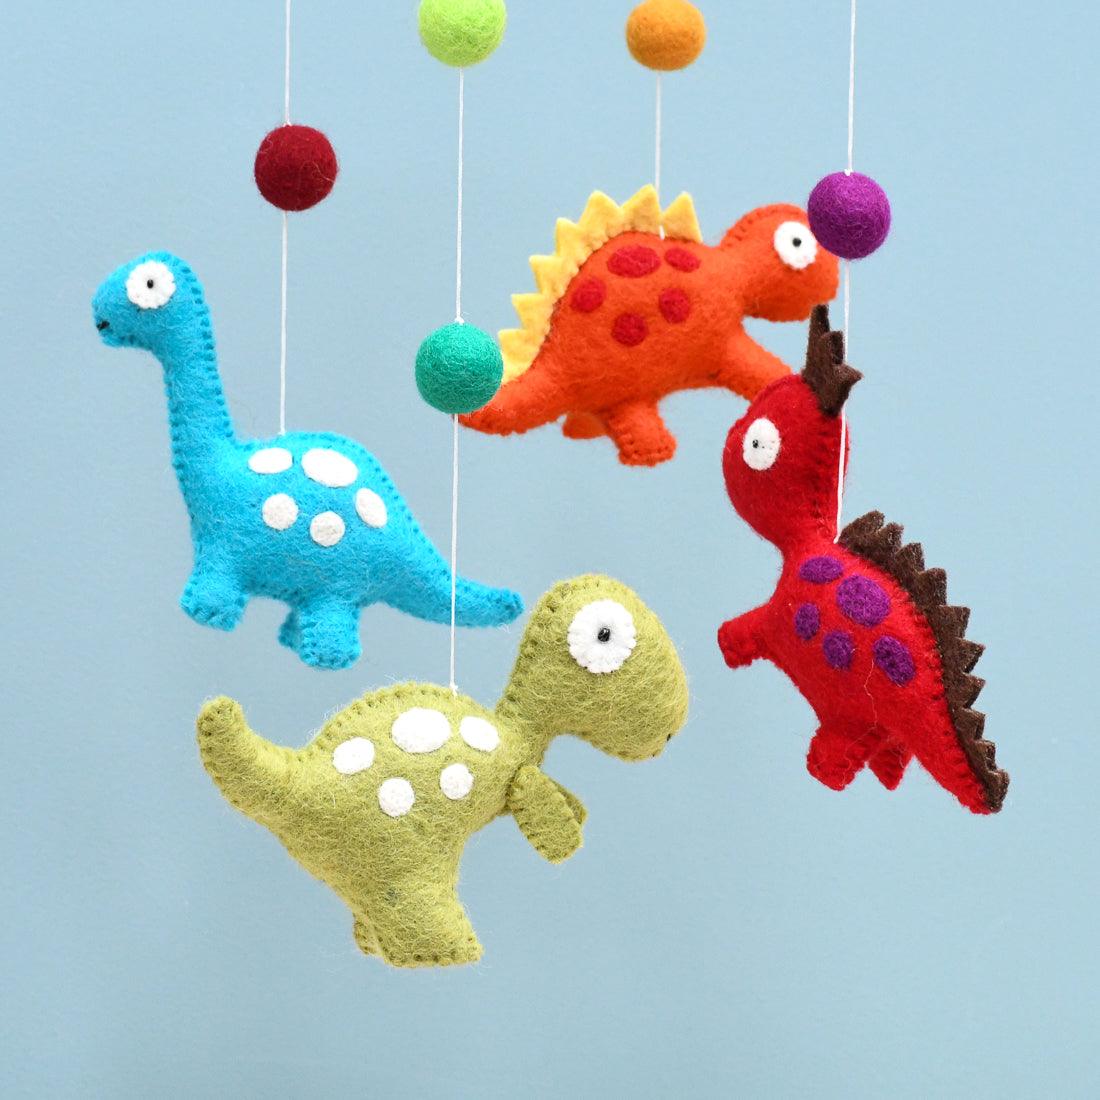 Nursery Cot Mobile - Dinosaurs - Tara Treasures